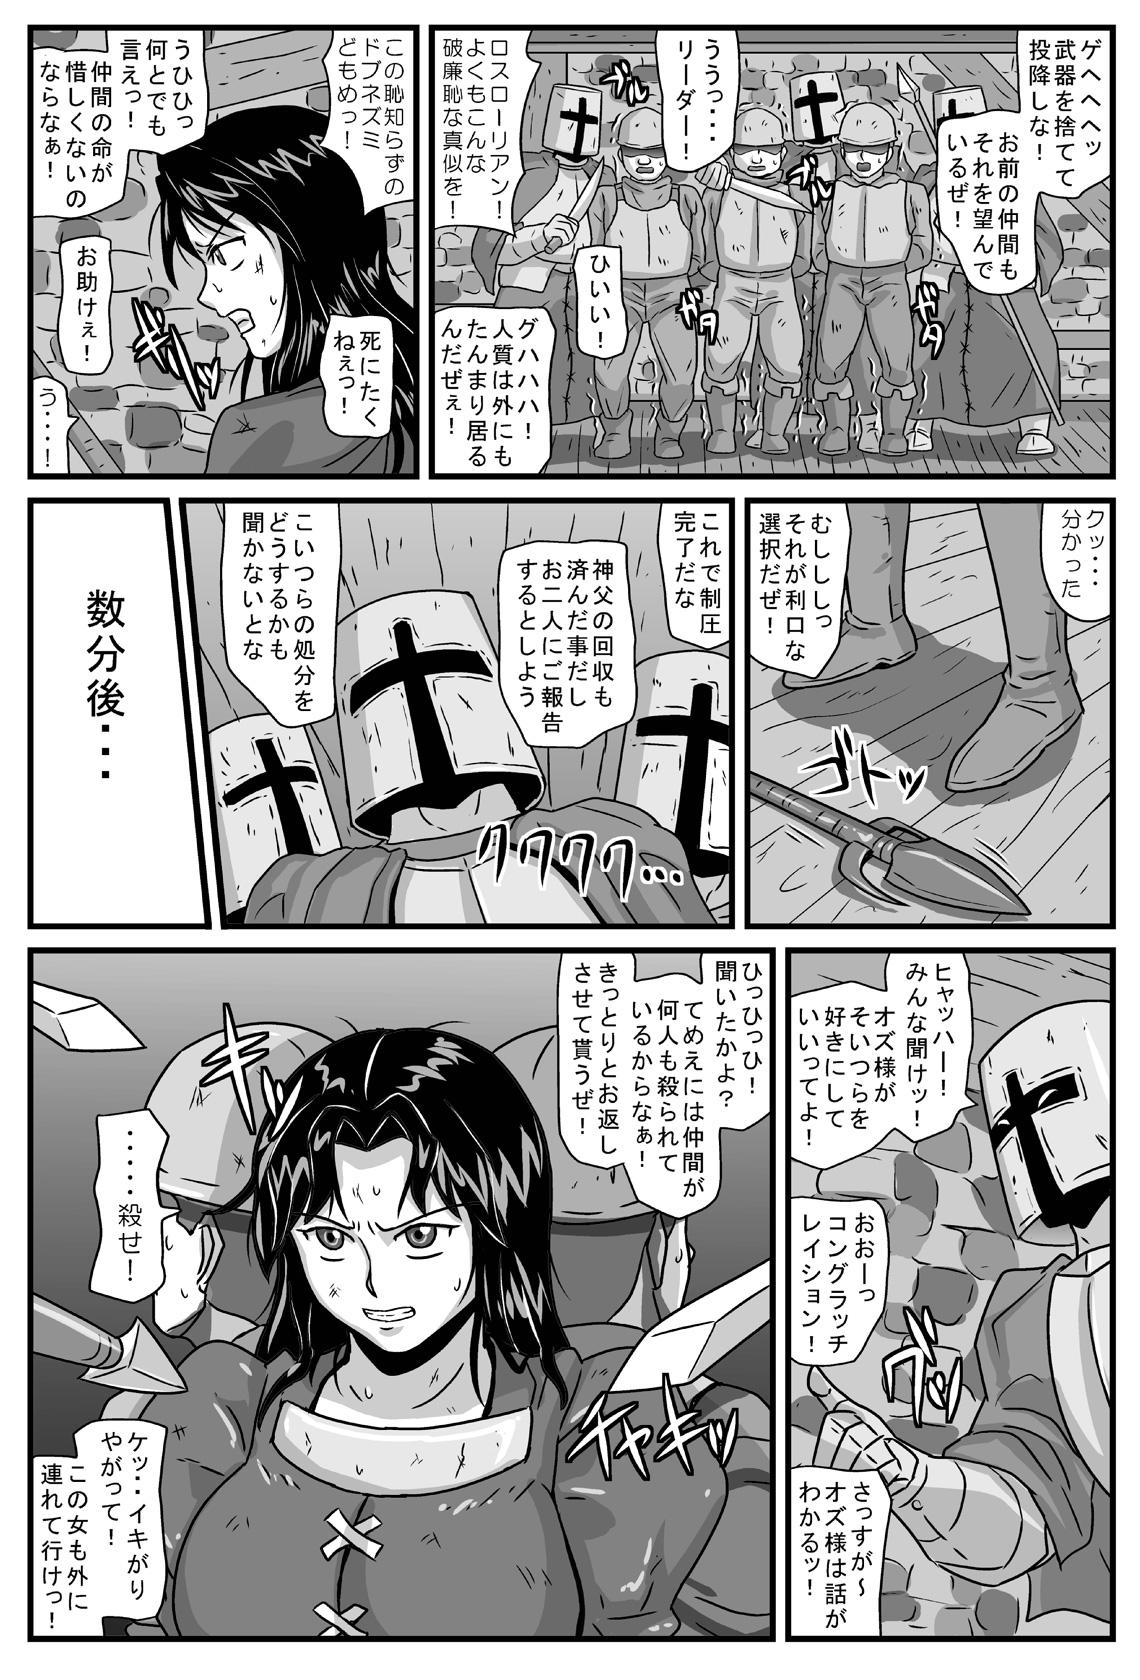 Naturaltits Guerrilla no Onna Leader wa Honoo no 26-sai Kurokami Shojo - Tactics ogre Inked - Page 3